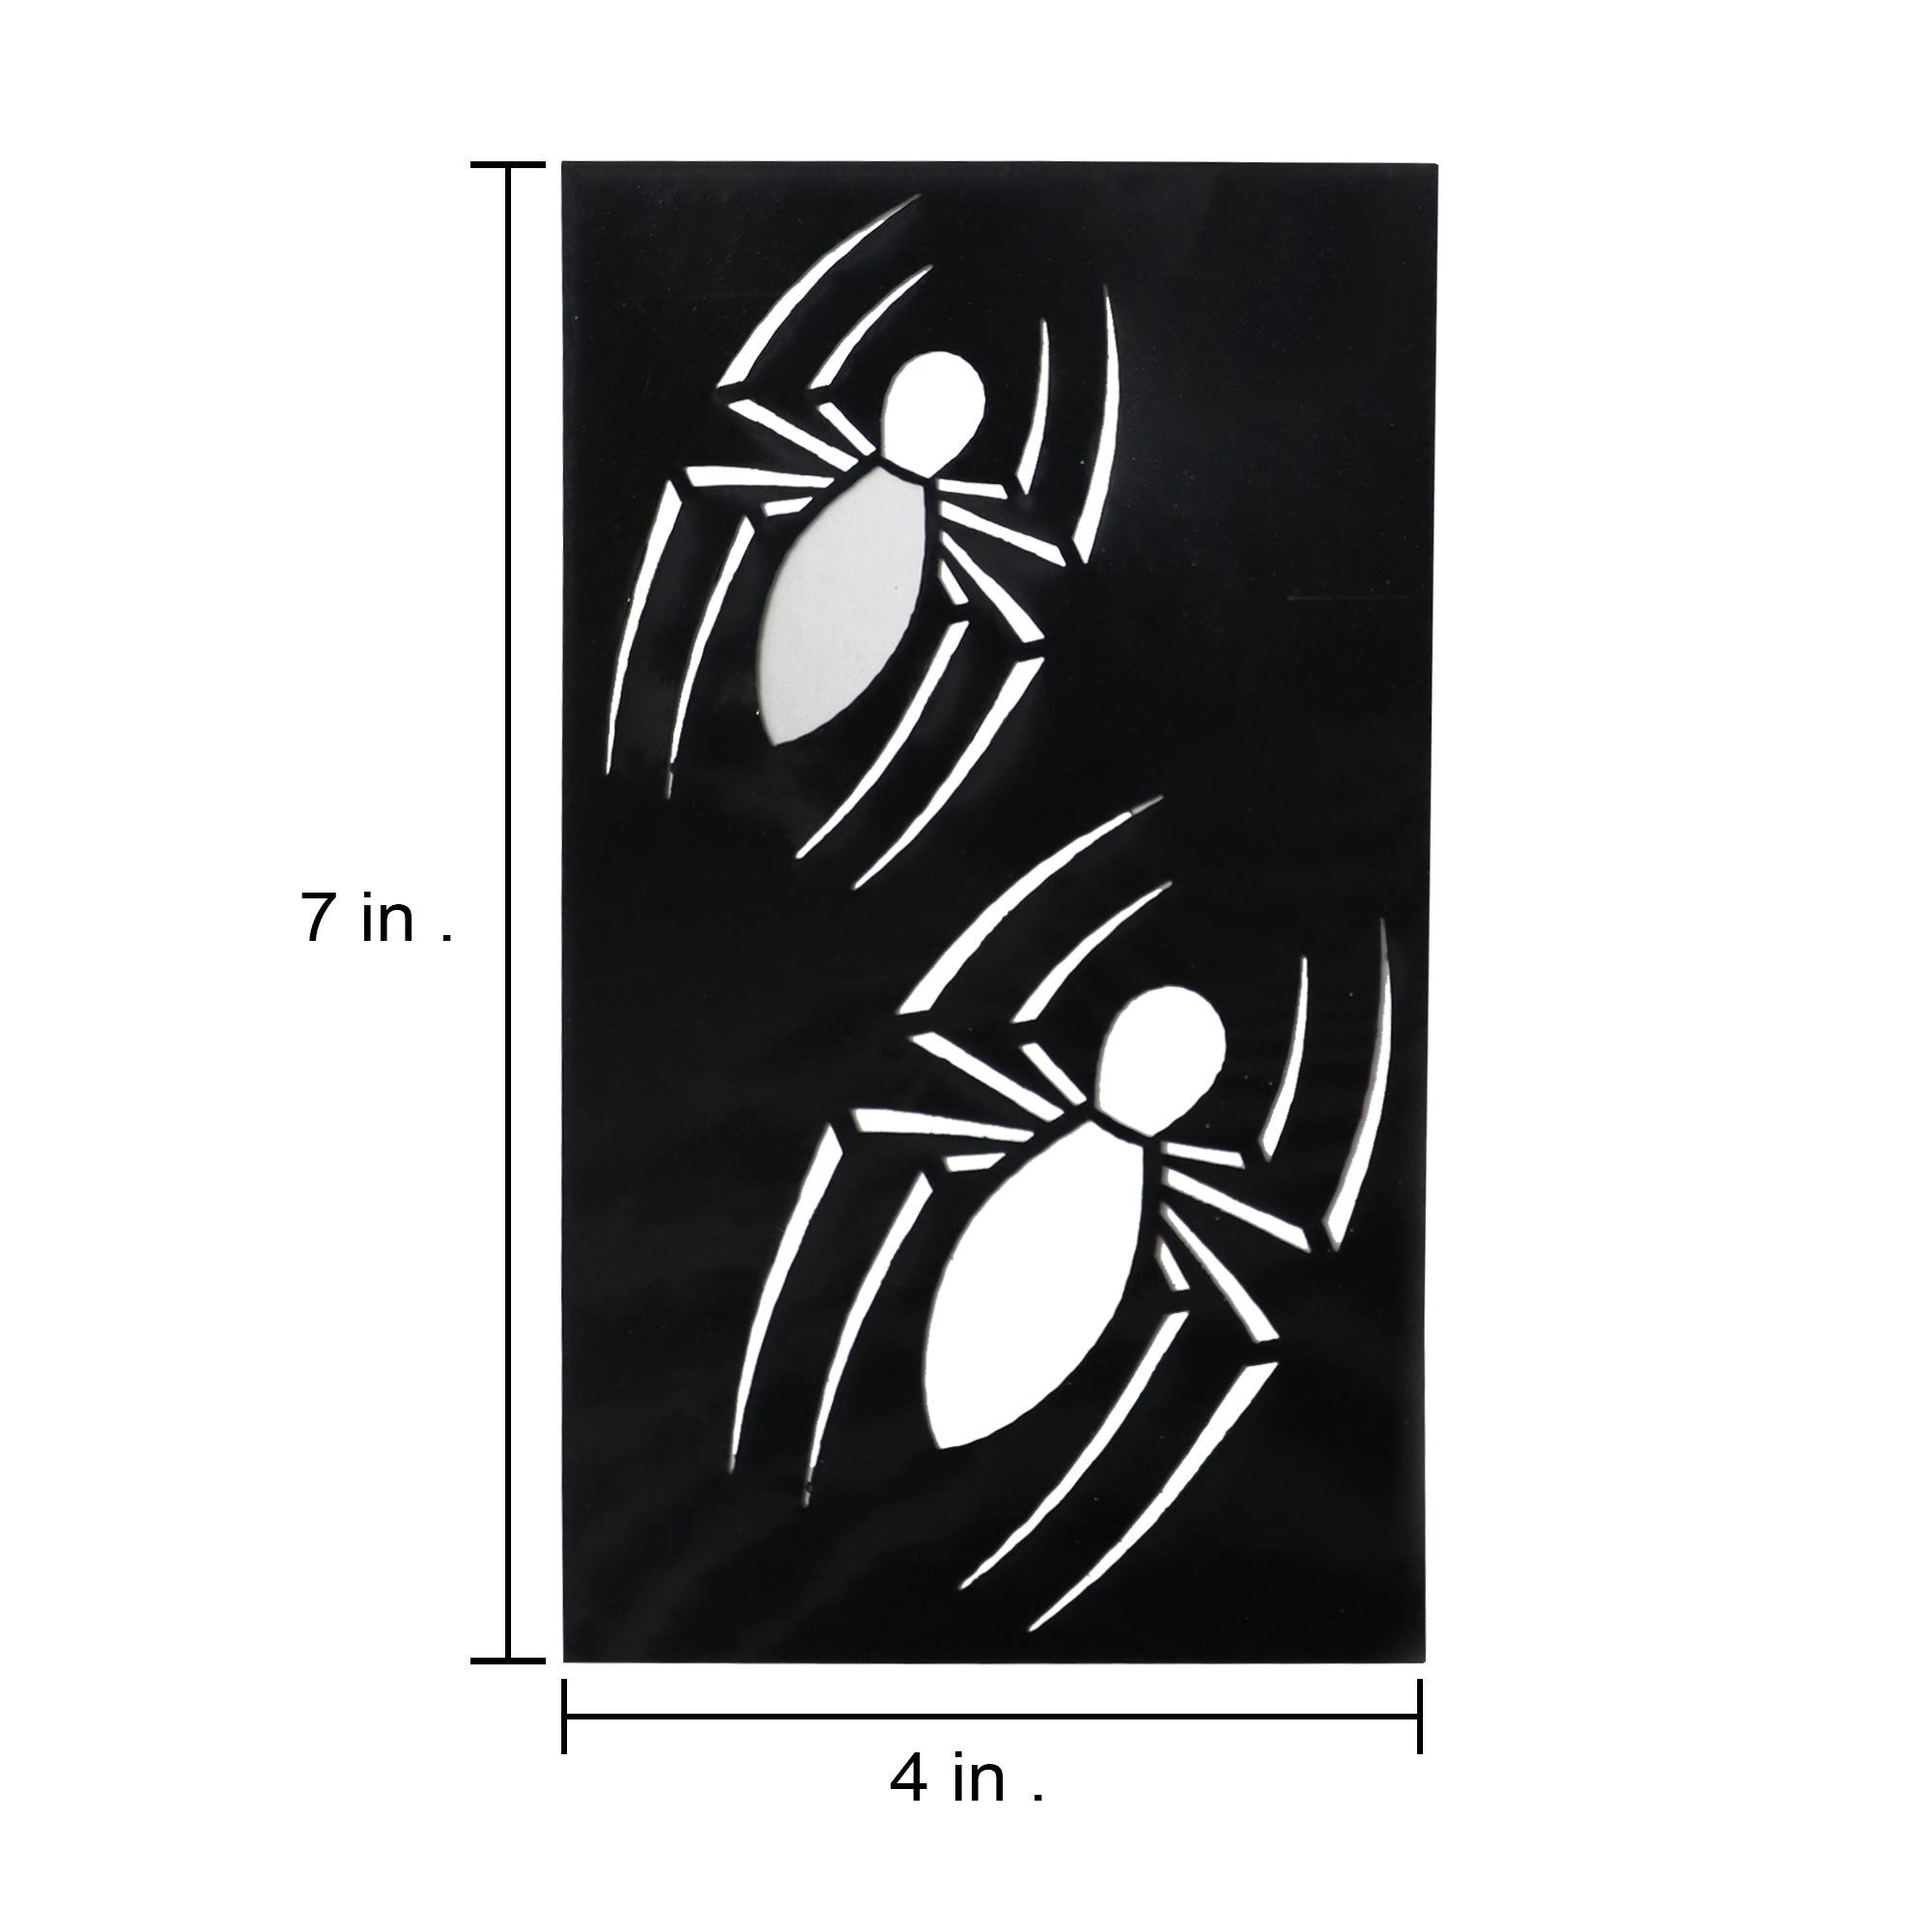 Stencil Spiders 4in x 7in 1Pc